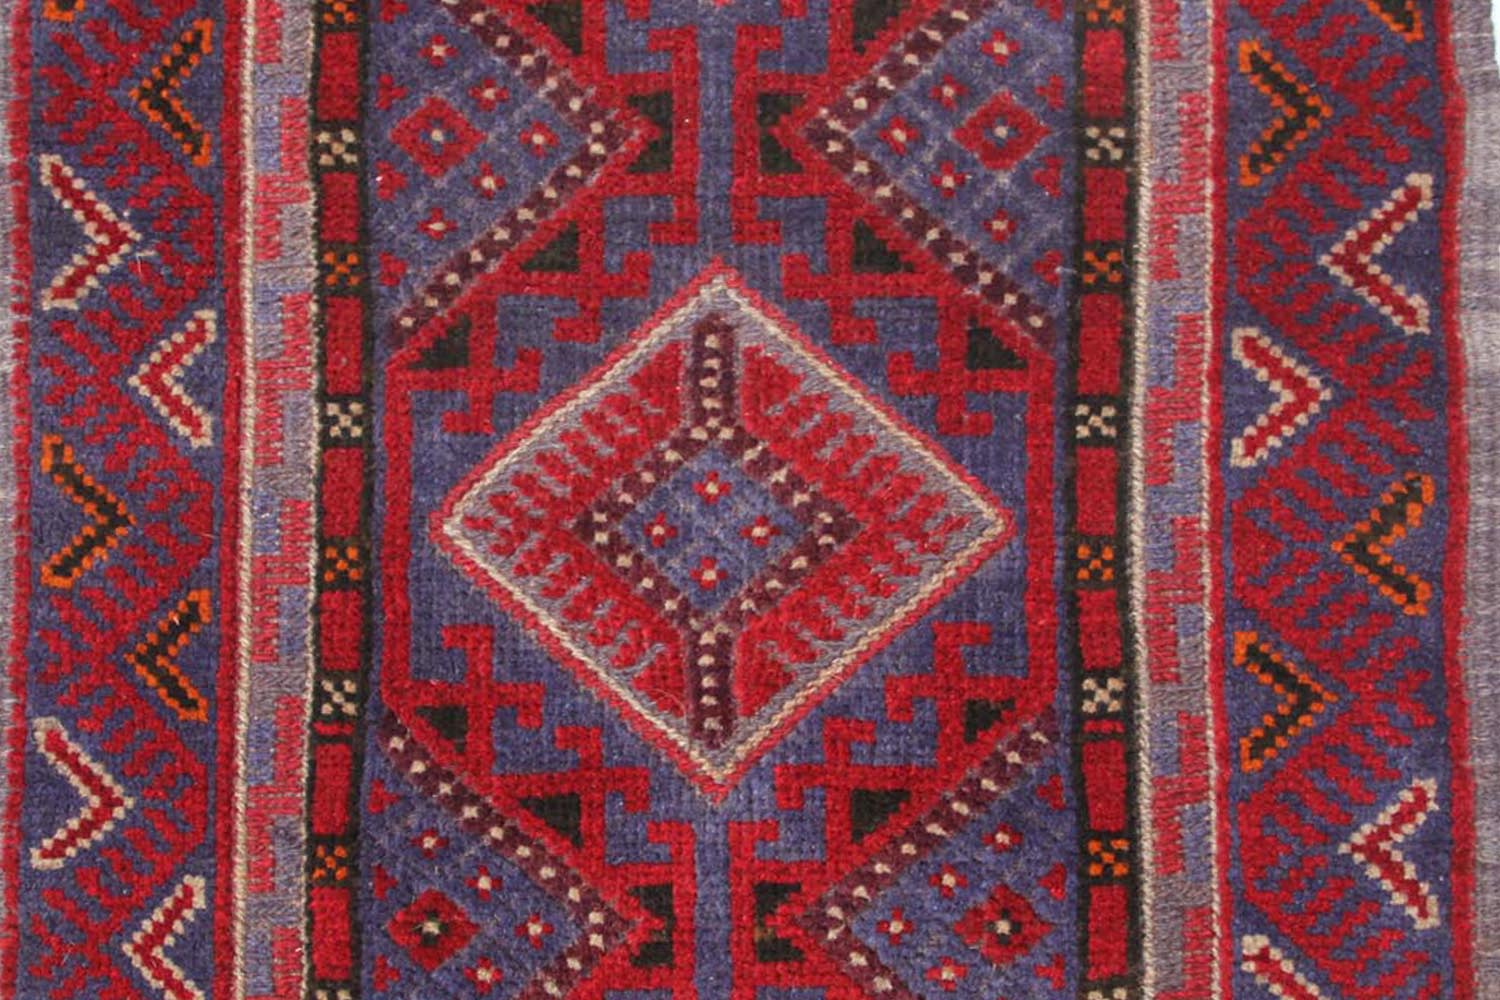 2x8 ft Reds Mashwani Rugs Lowest Price Tribal Wool Handmade Runner | eBay